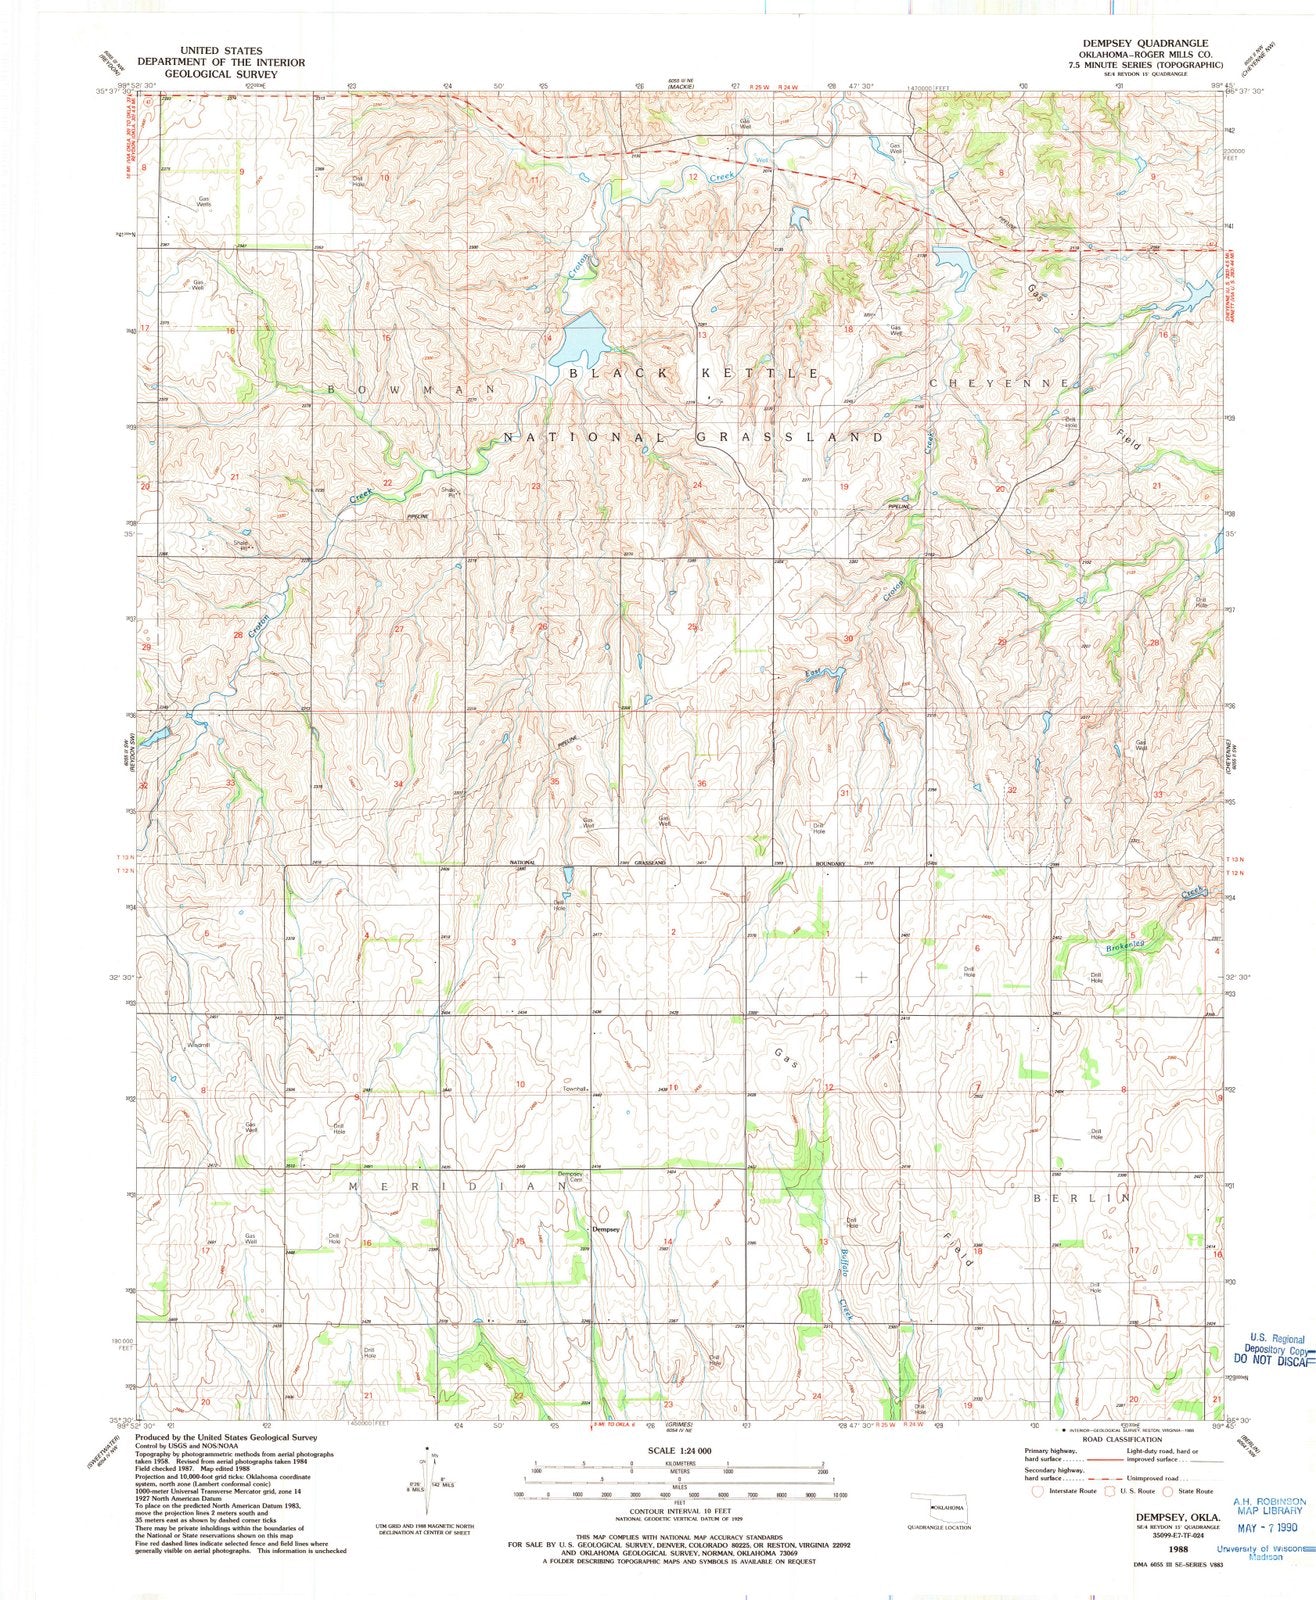 1988 Dempsey, OK - Oklahoma - USGS Topographic Map